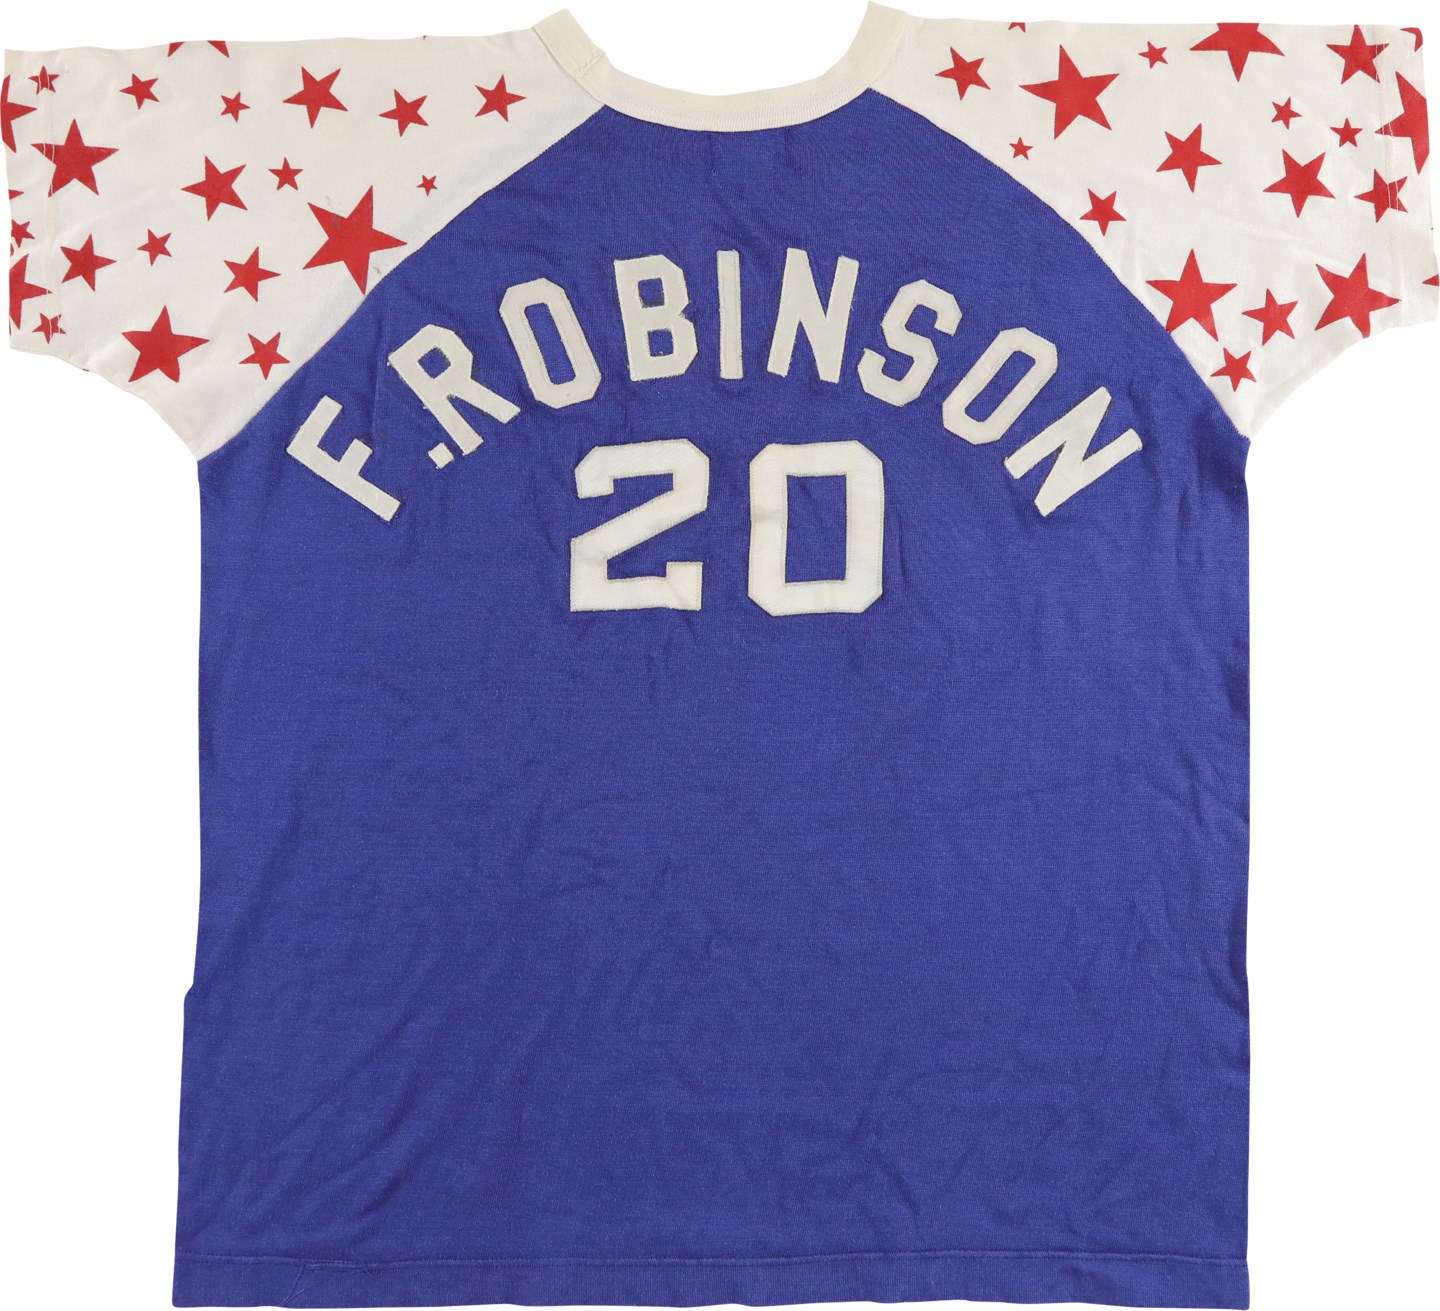 - Circa 1970 Frank Robinson All Star Softball Game Worn Jersey